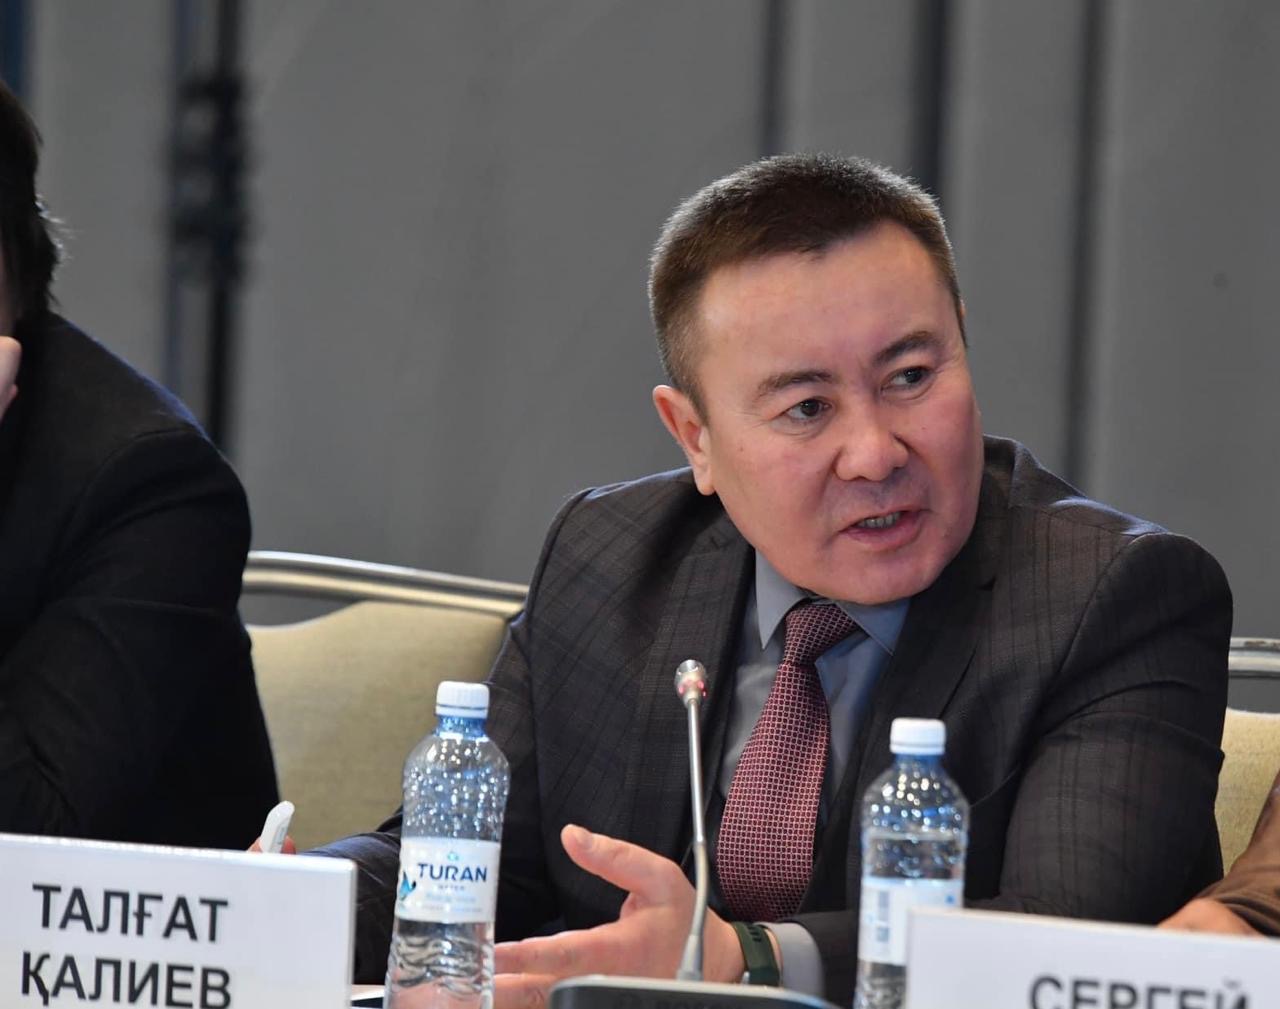 Талгат Калиев: Турлов не соответствует должности президента федерации шахмат